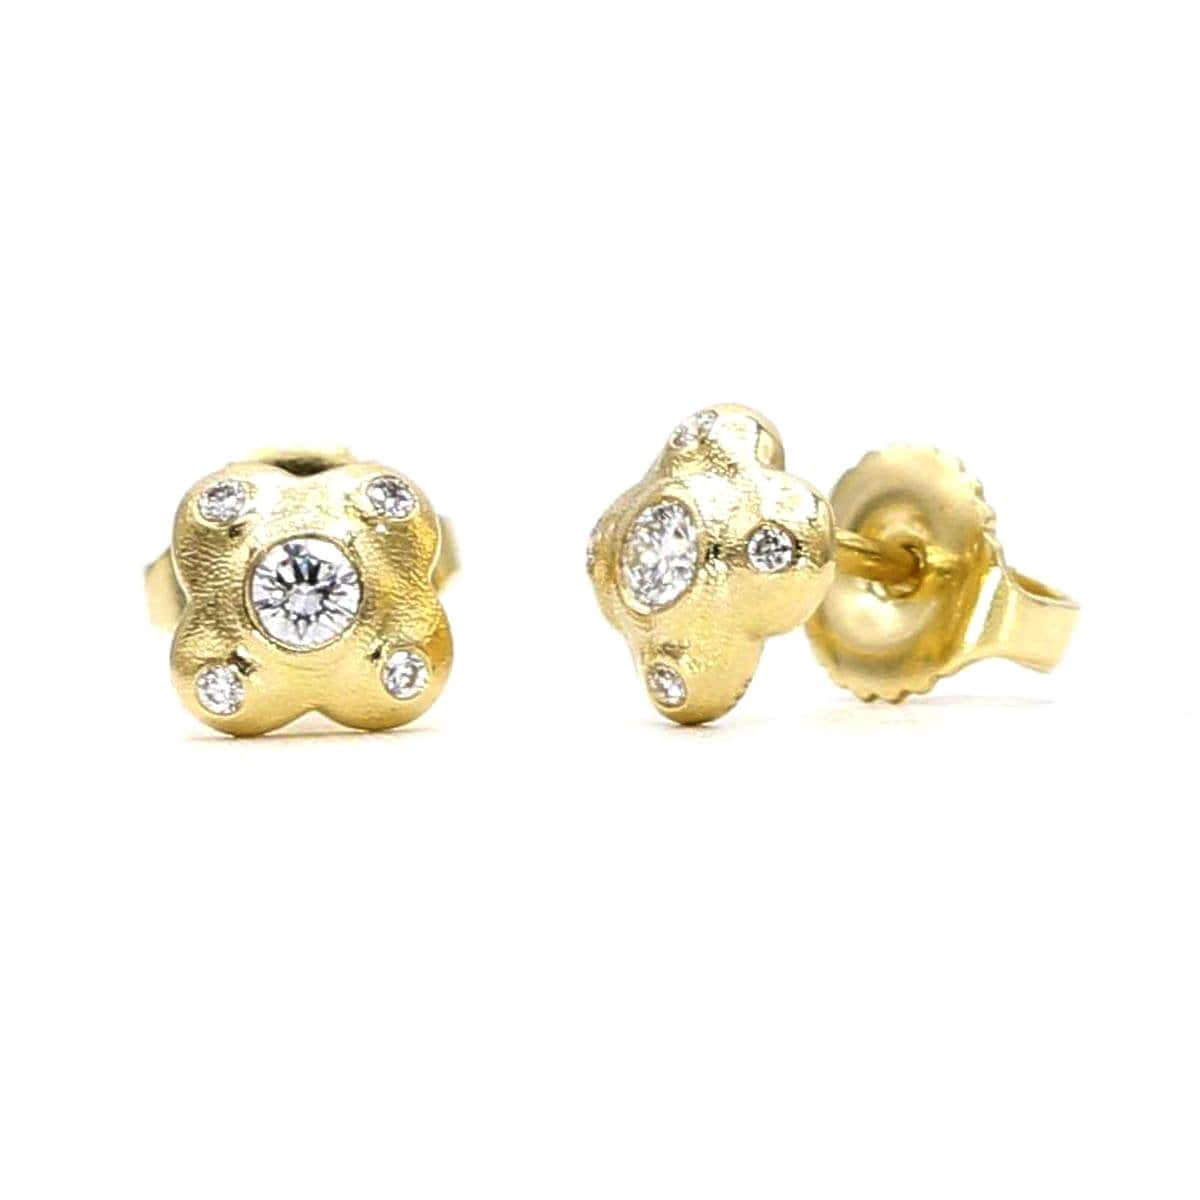 CVD Matinee Diamond Earrings, 2.6 Gm, 14 Kt at Rs 30442/pair in Surat | ID:  2851493385533